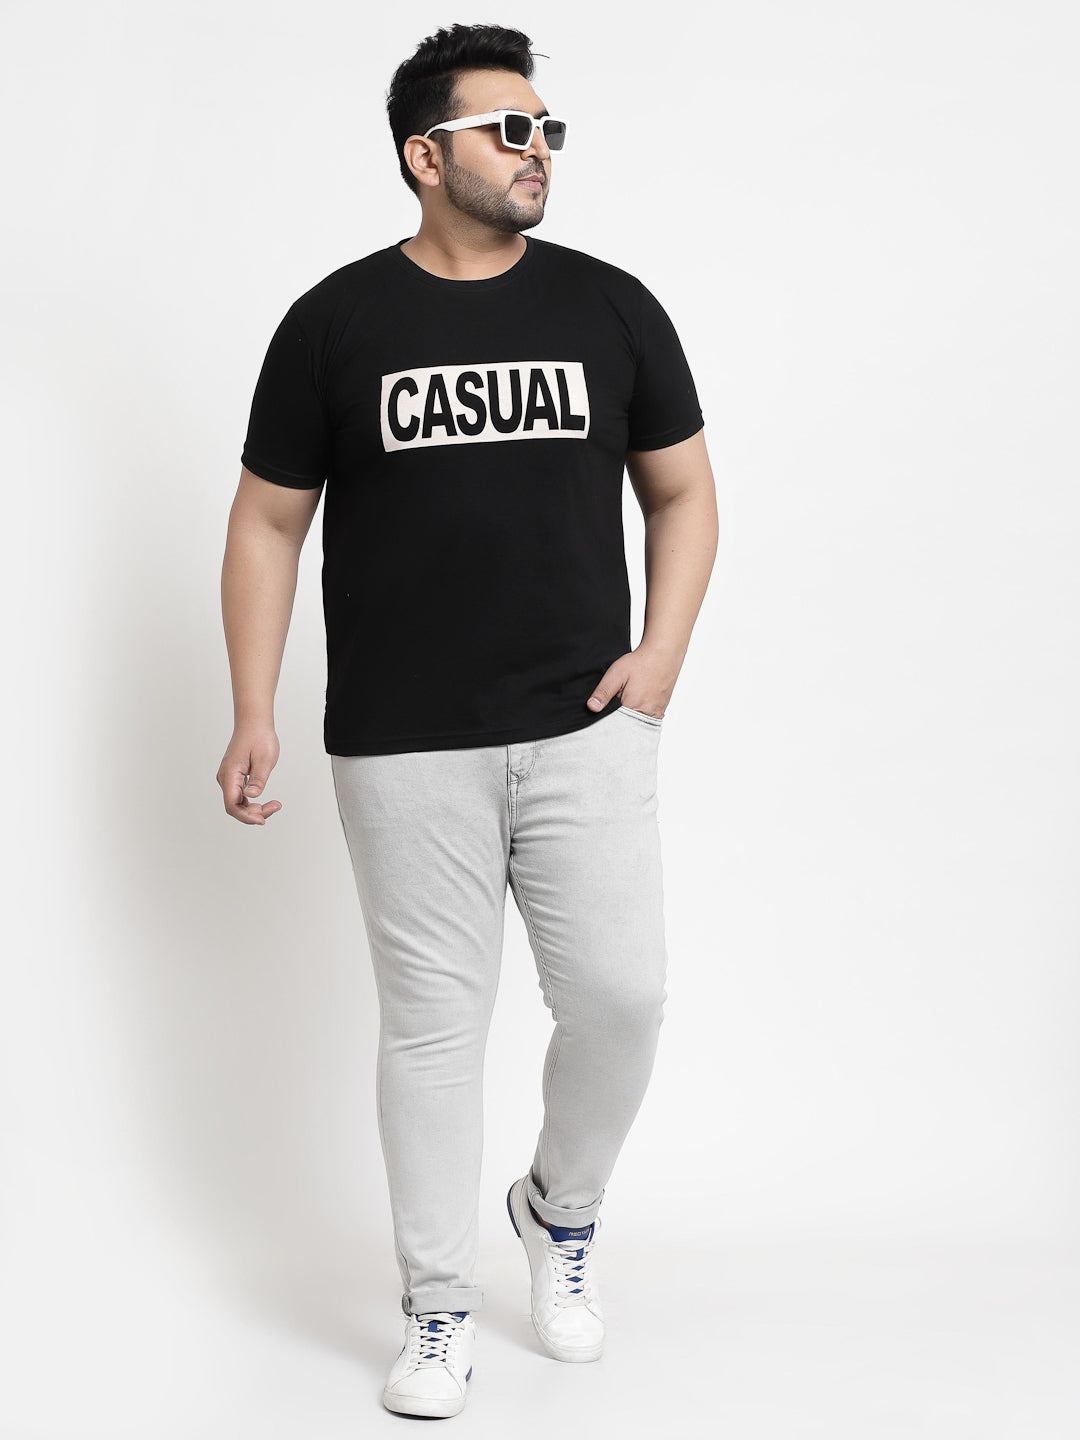 Men Plus Size Black & White Printed Pure Cotton T-shirt